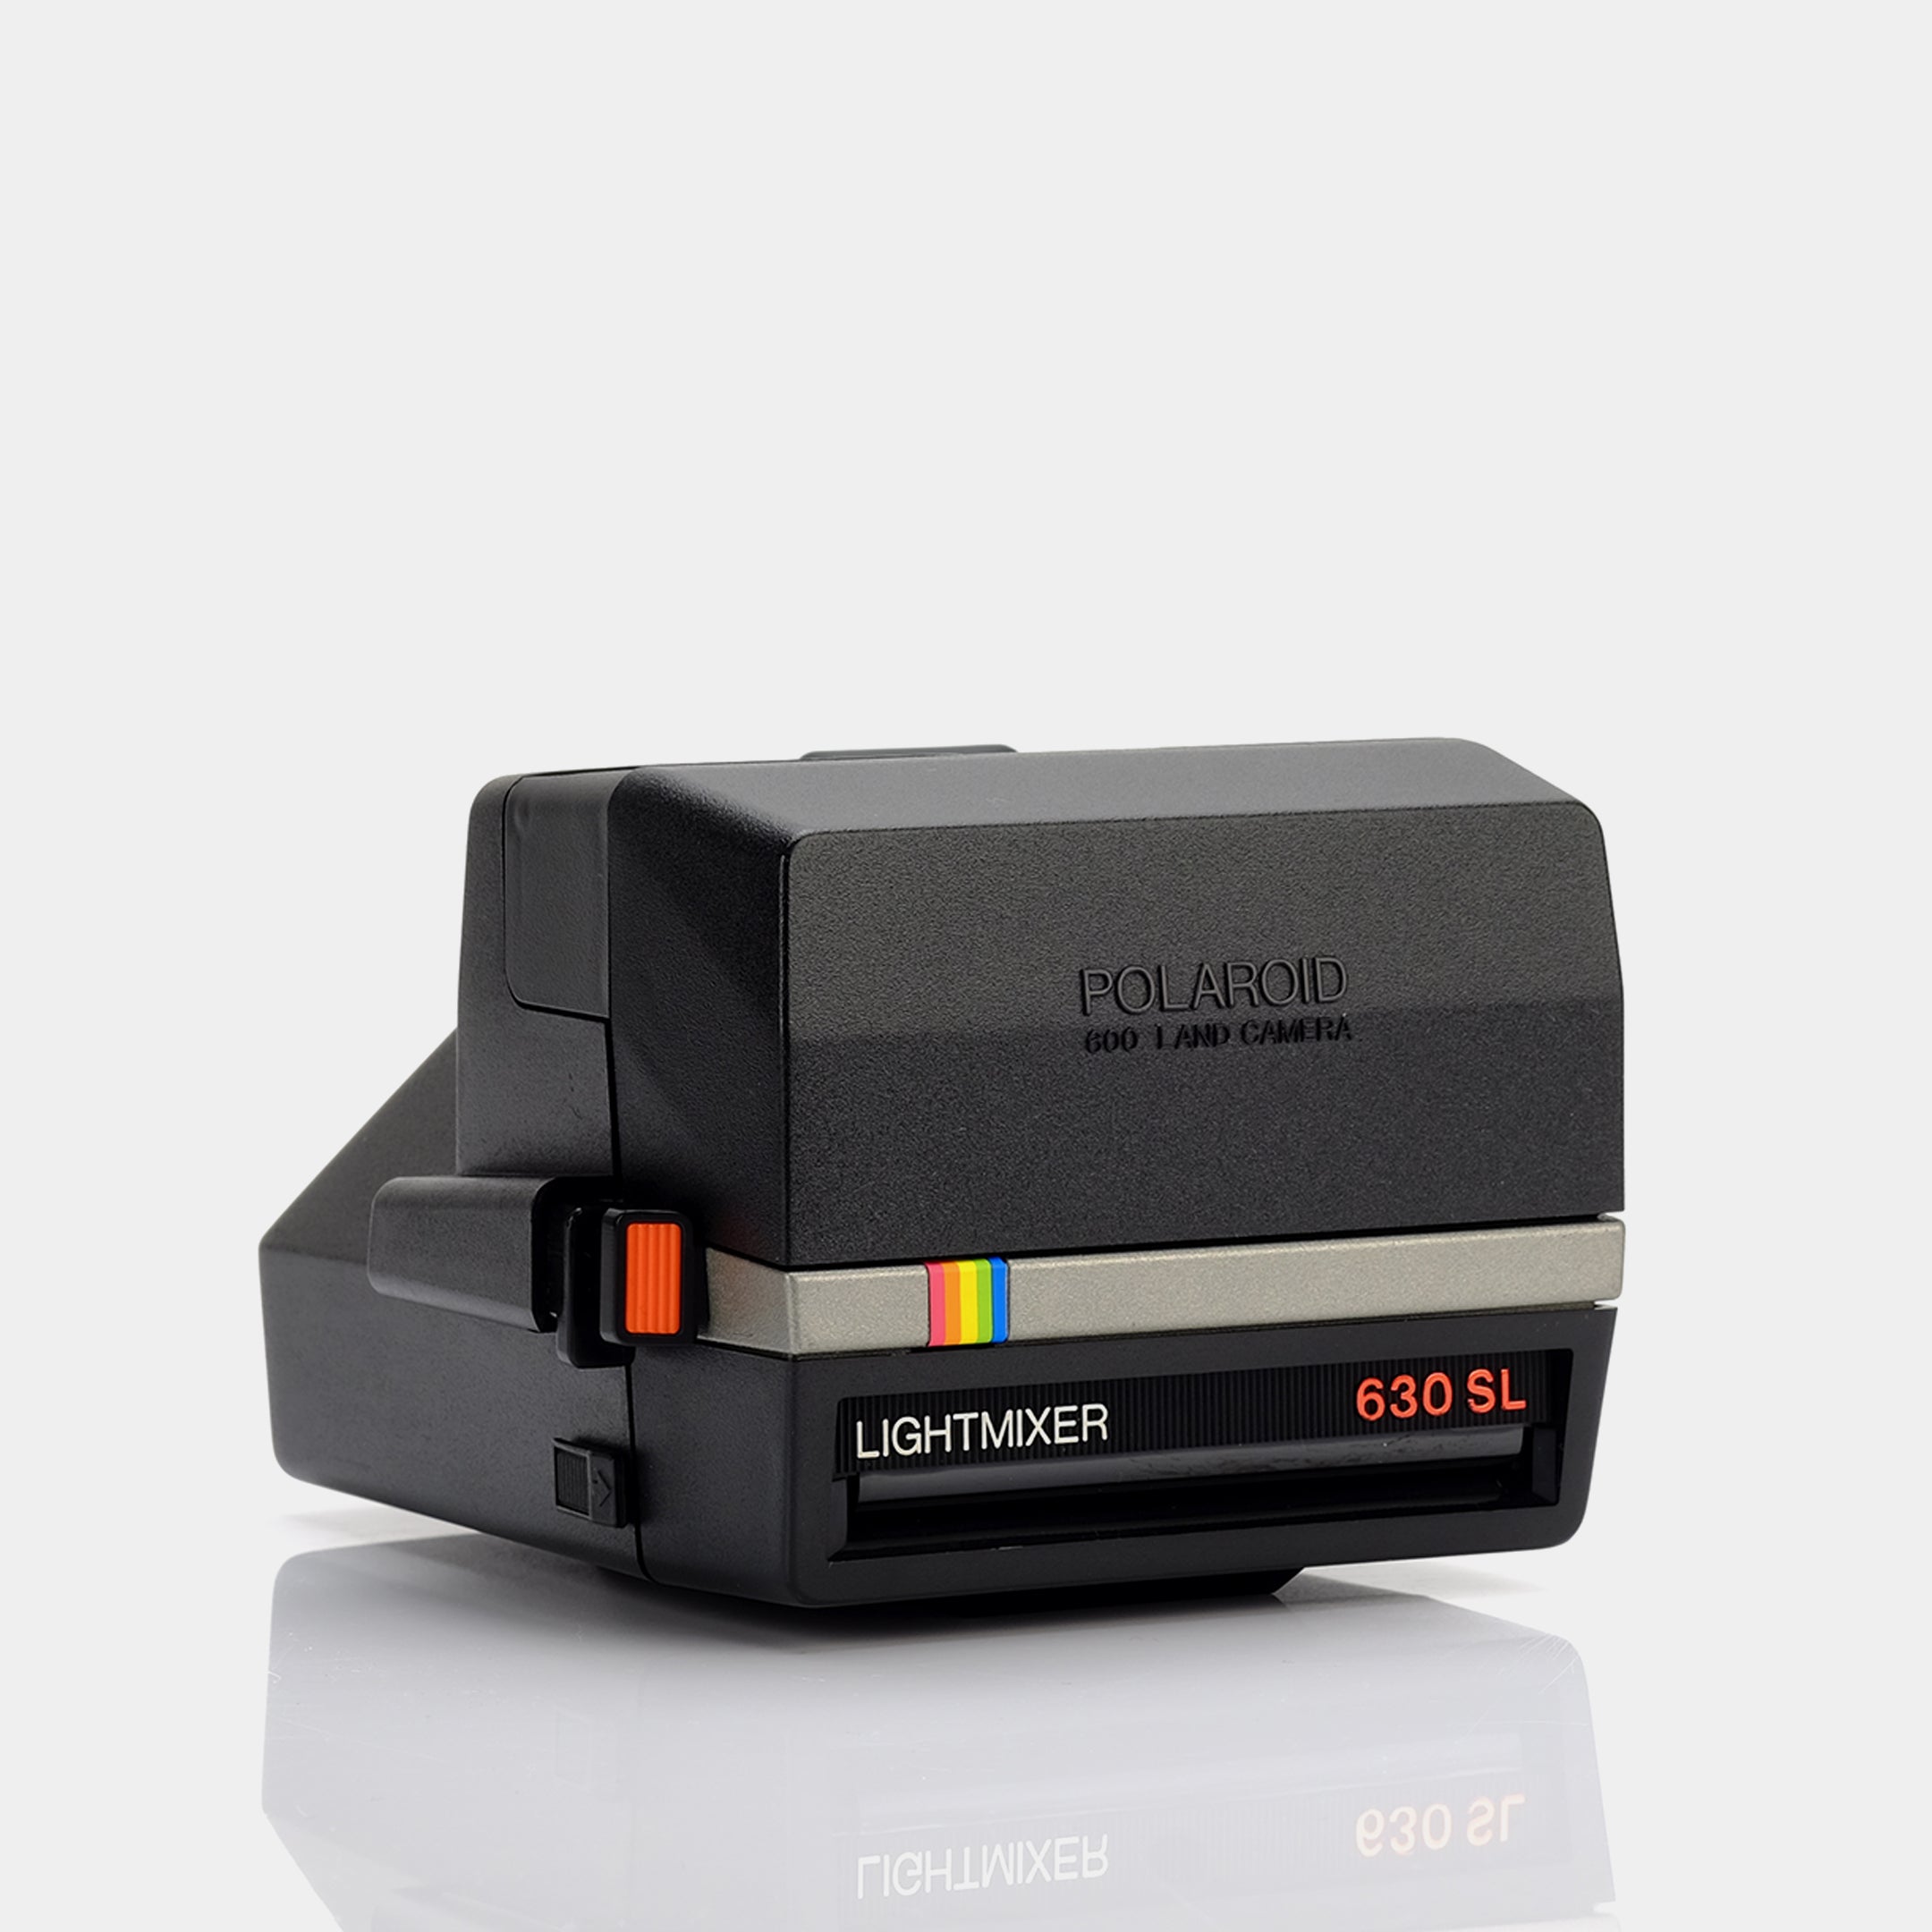 Polaroid 600 Lightmixer 630 SL Instant Film Camera